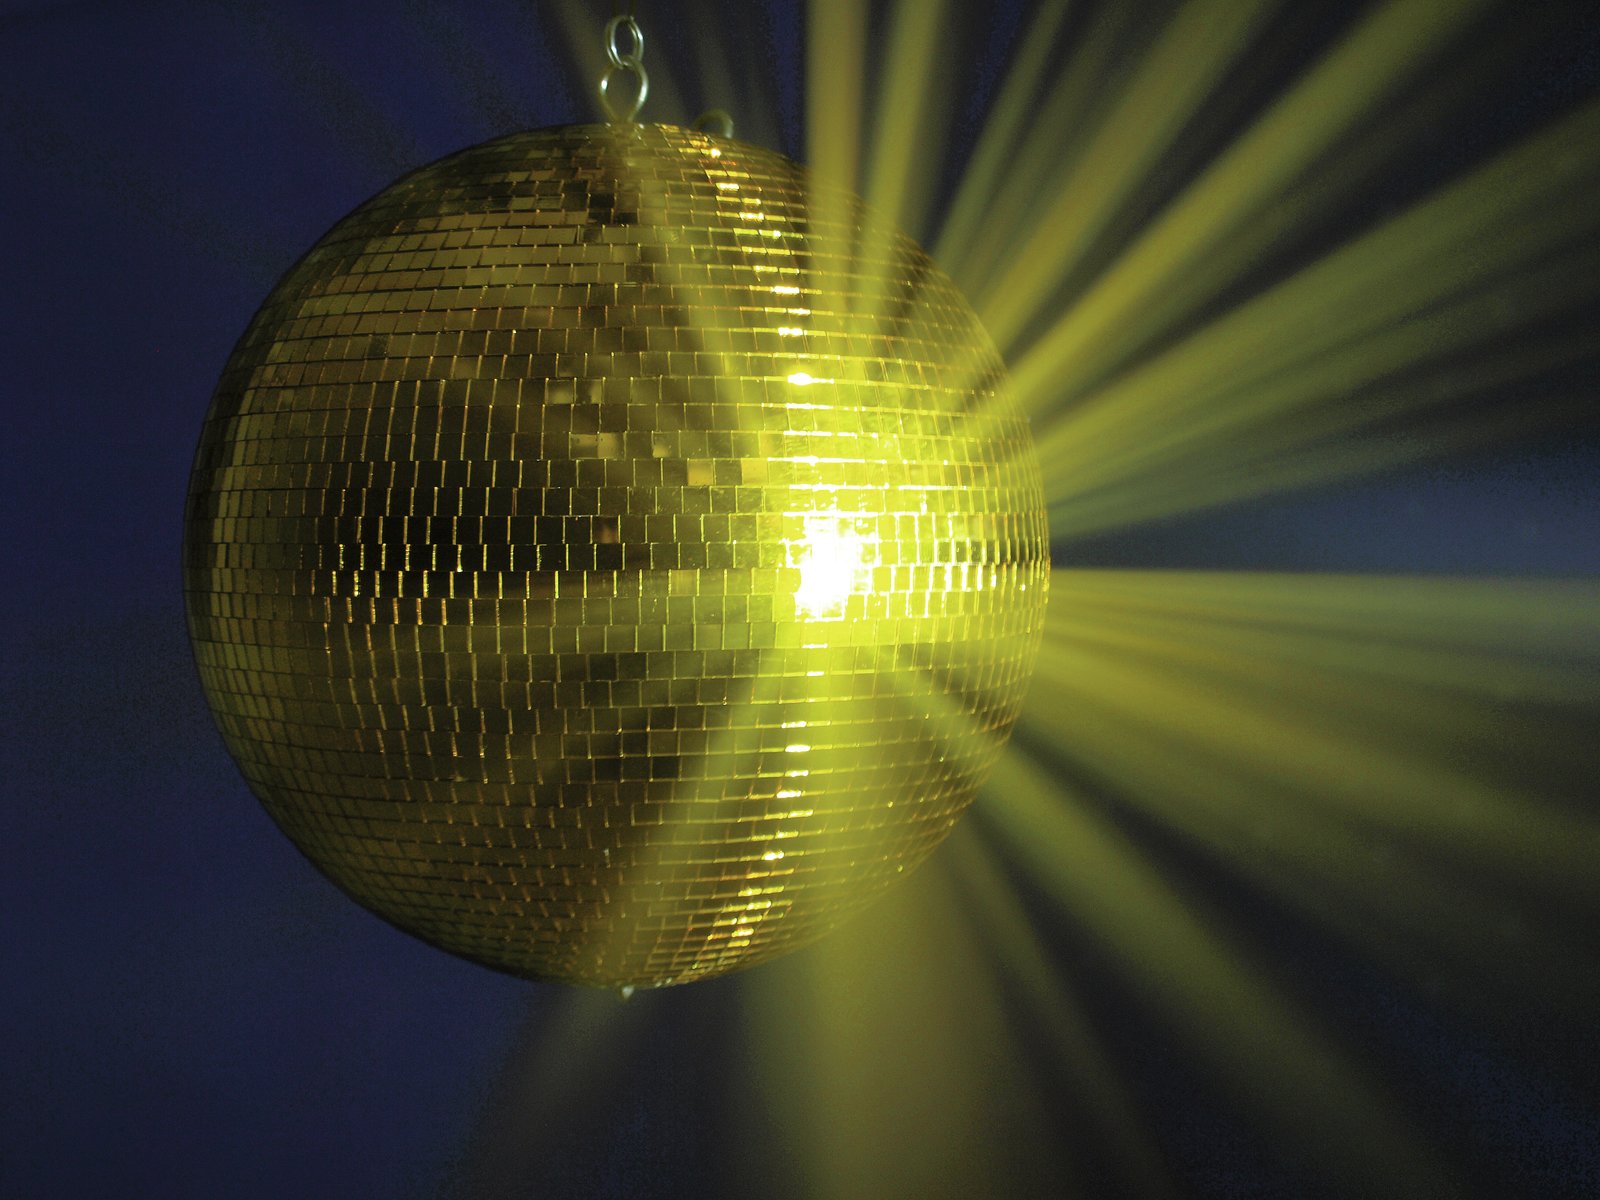 Spiegelkugel 40cm gold- Diskokugel (Discokugel) Party Lichteffekt - Echtglas - mirrorball safety gold color